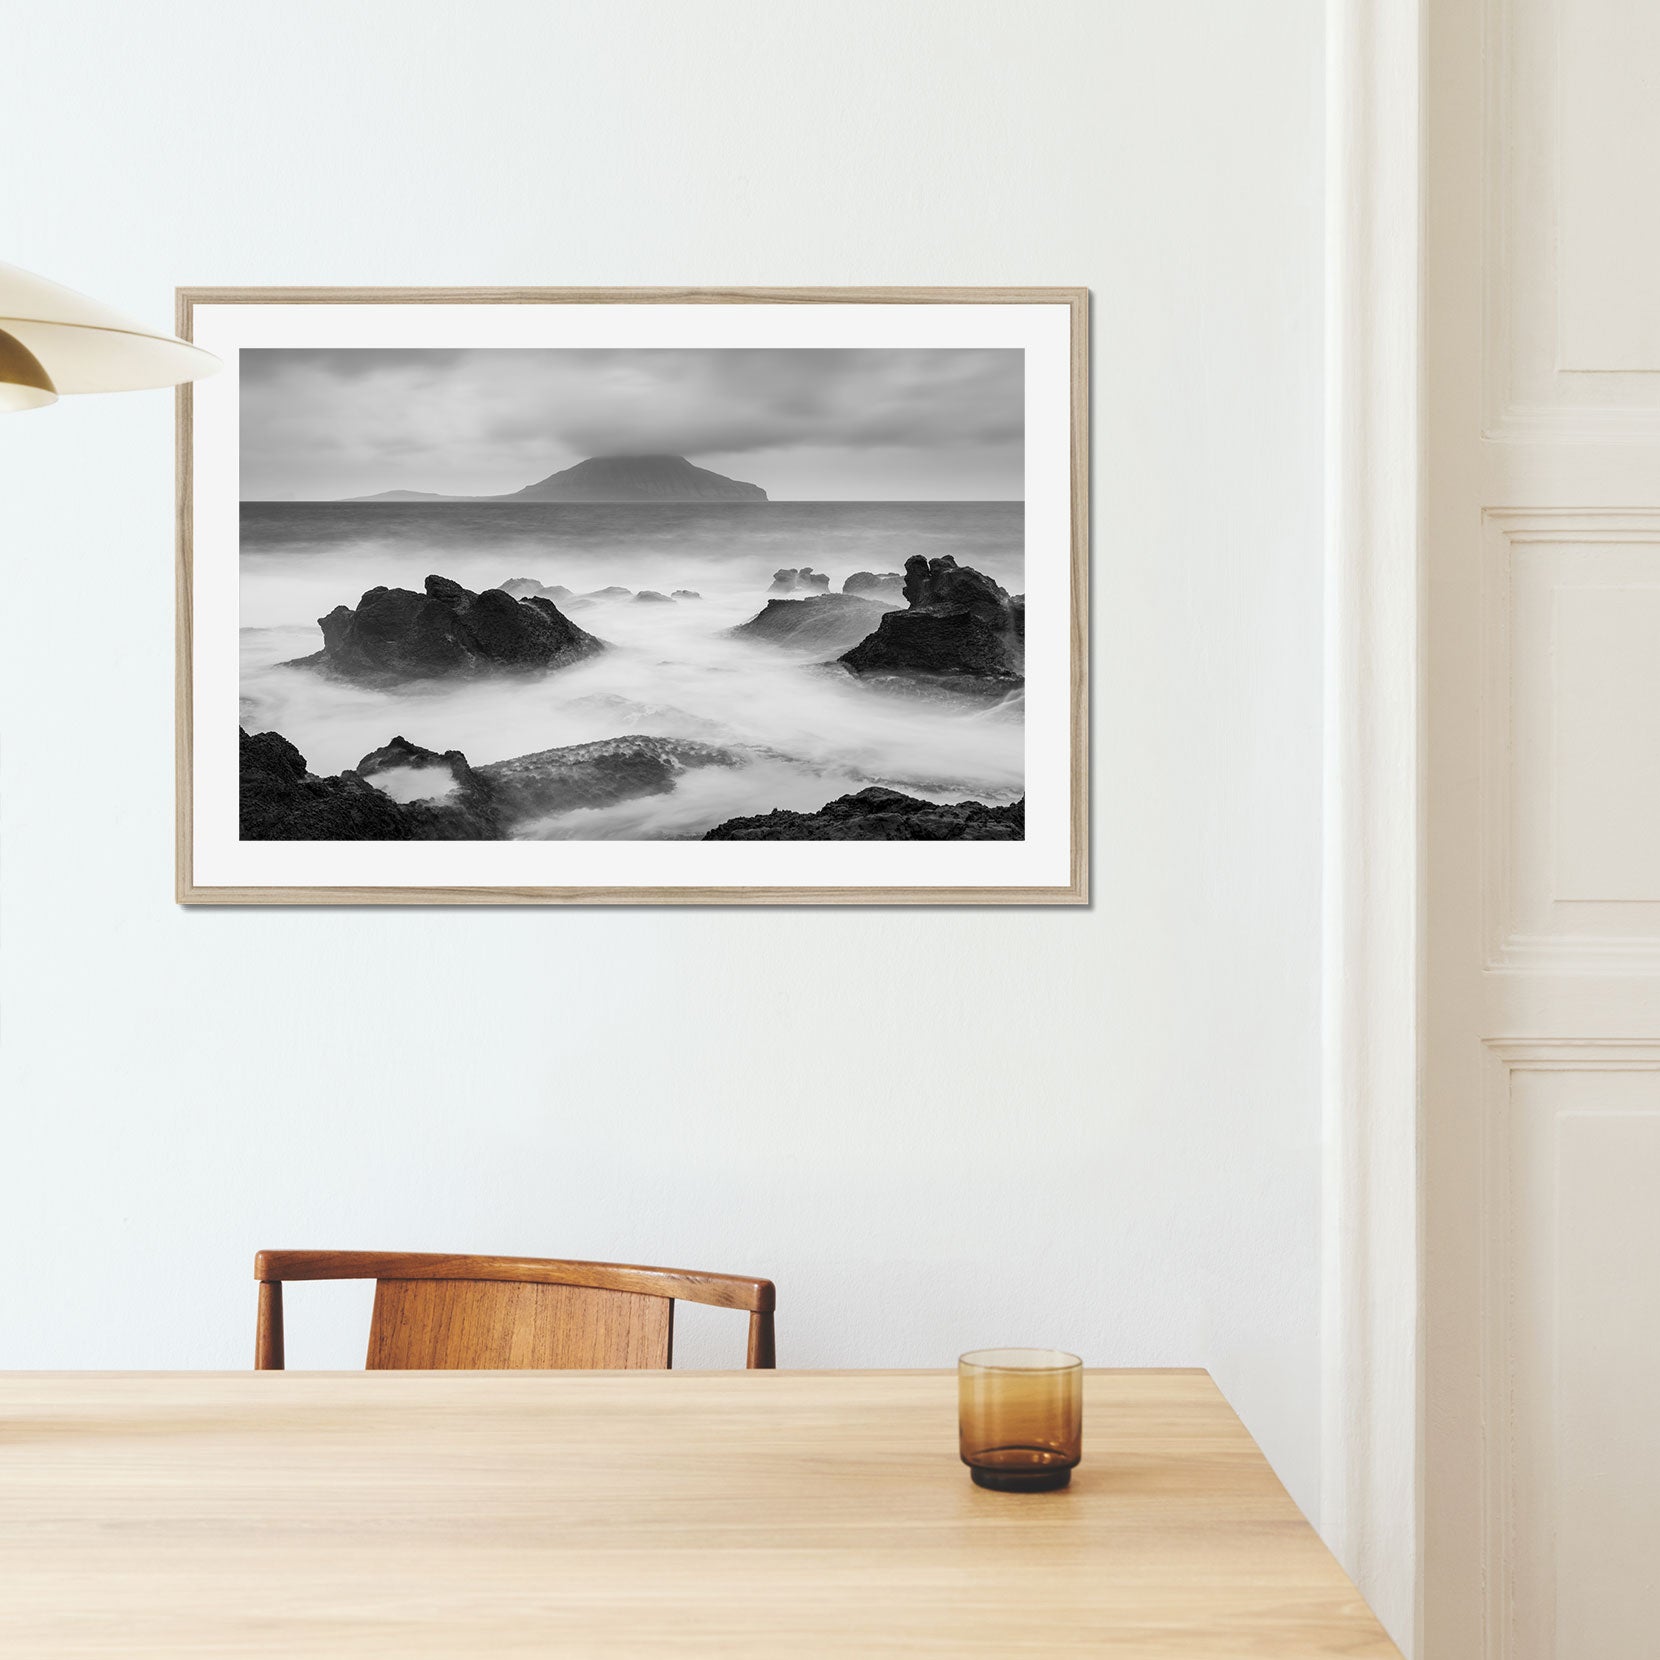 A framed print of a rugged shoreline on the Faroe Islands